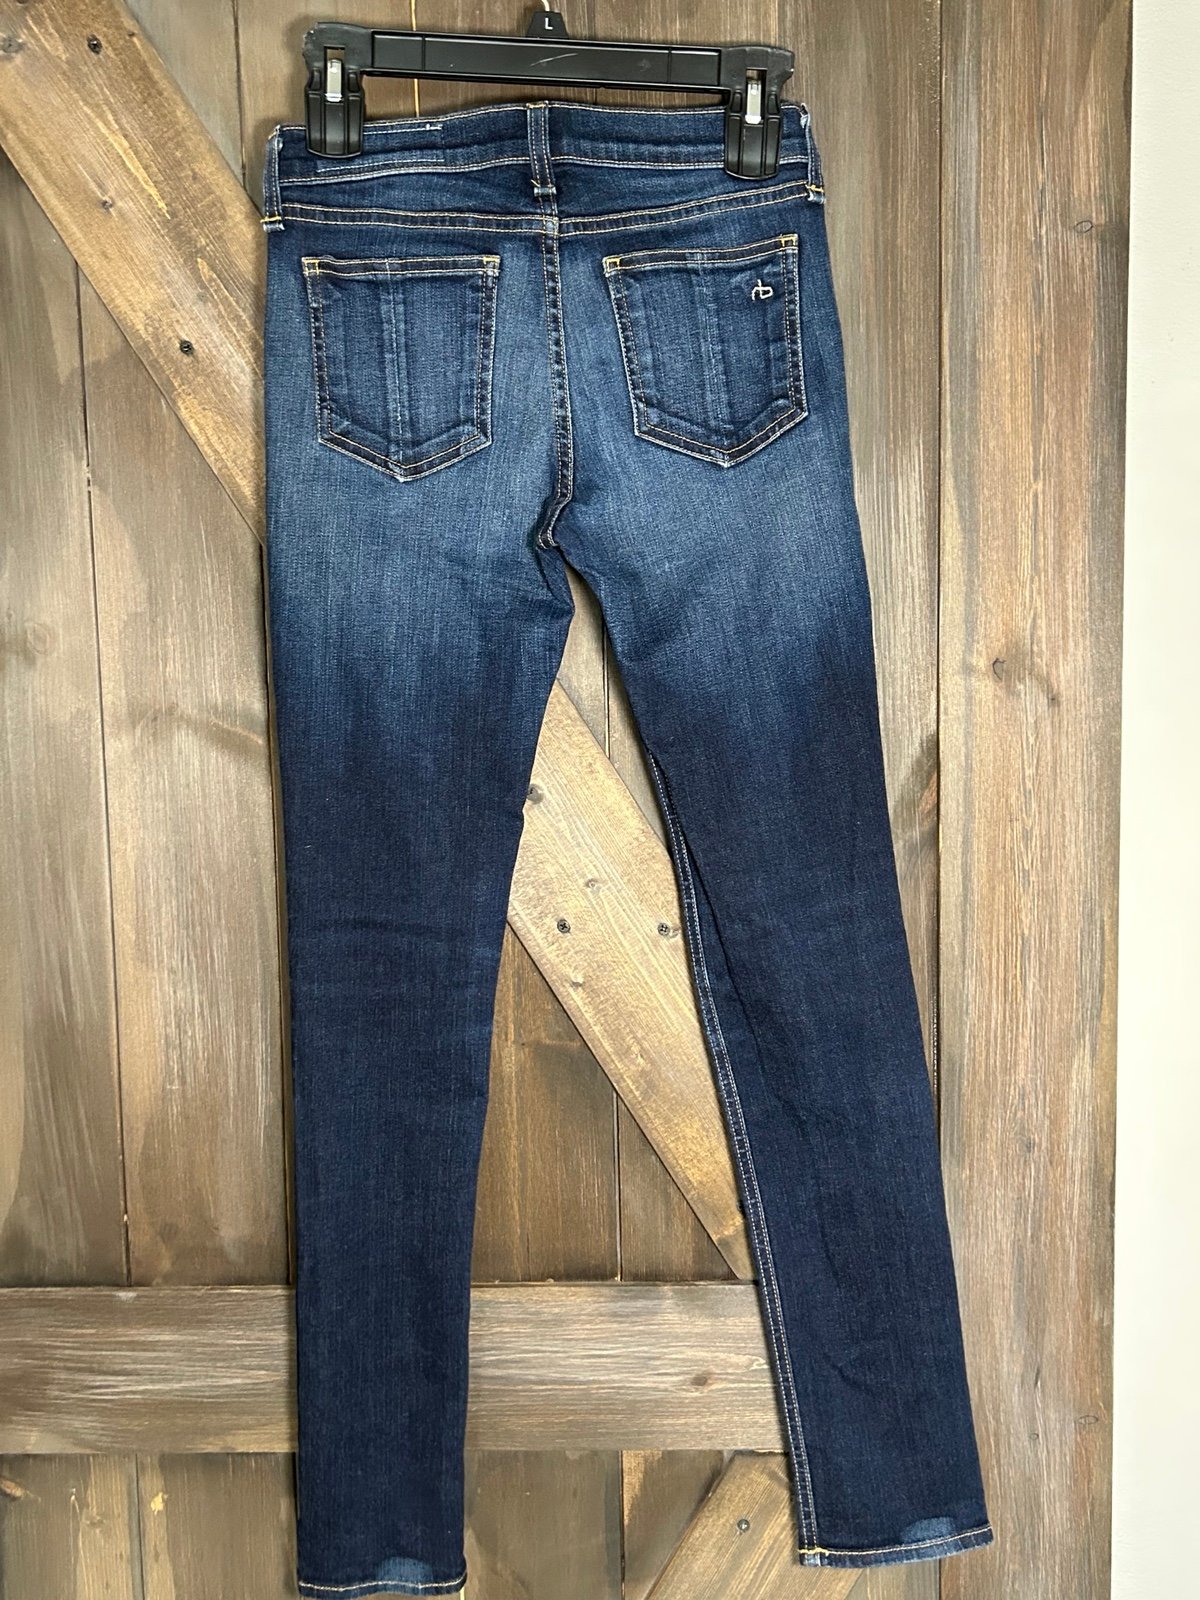 Cheap Rag & Bone Jeans SZ 26 khy96sYwg on sale